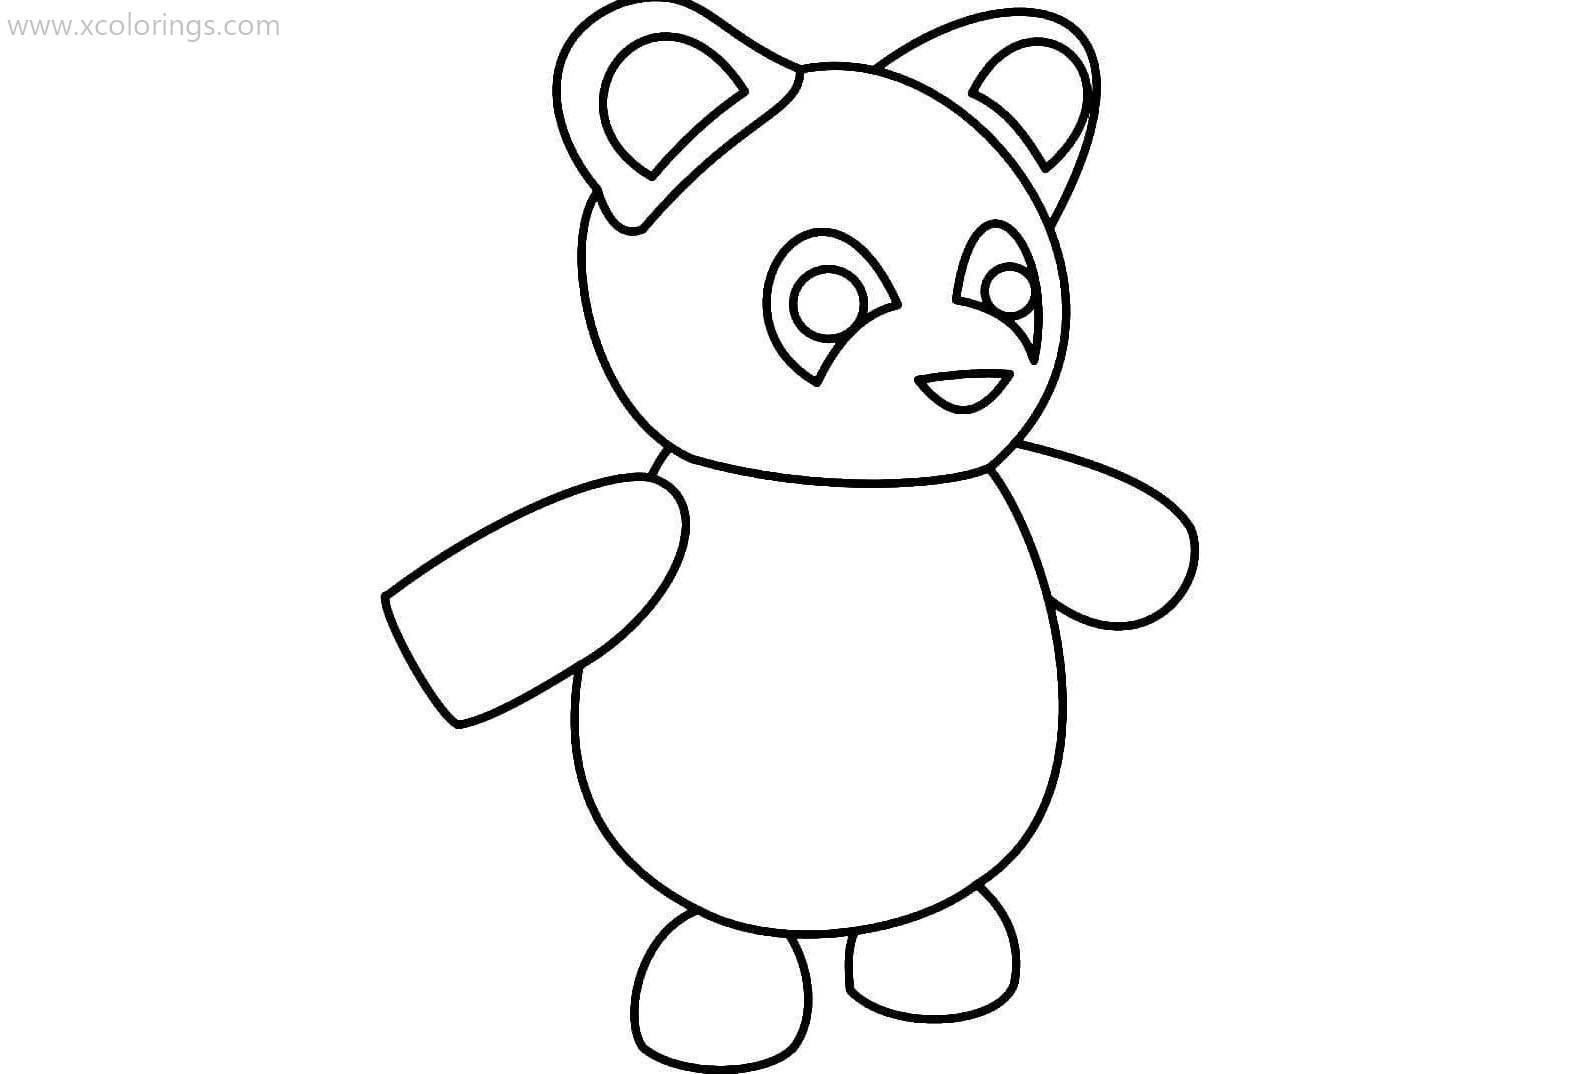 Free Roblox Adopt Me Coloring Pages Panda printable